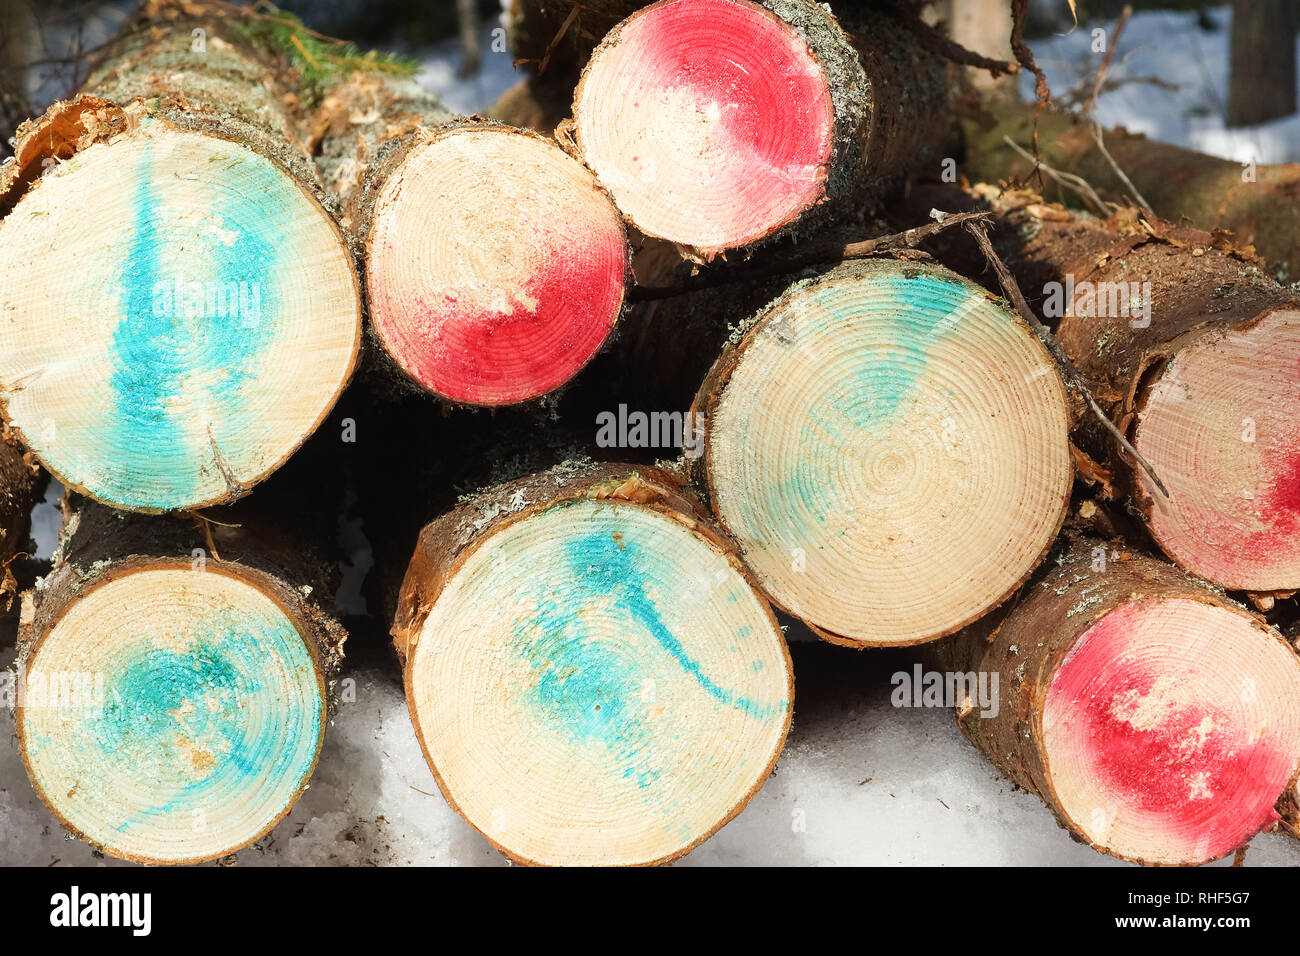 Holzindustrie Industrieholz Stockfoto